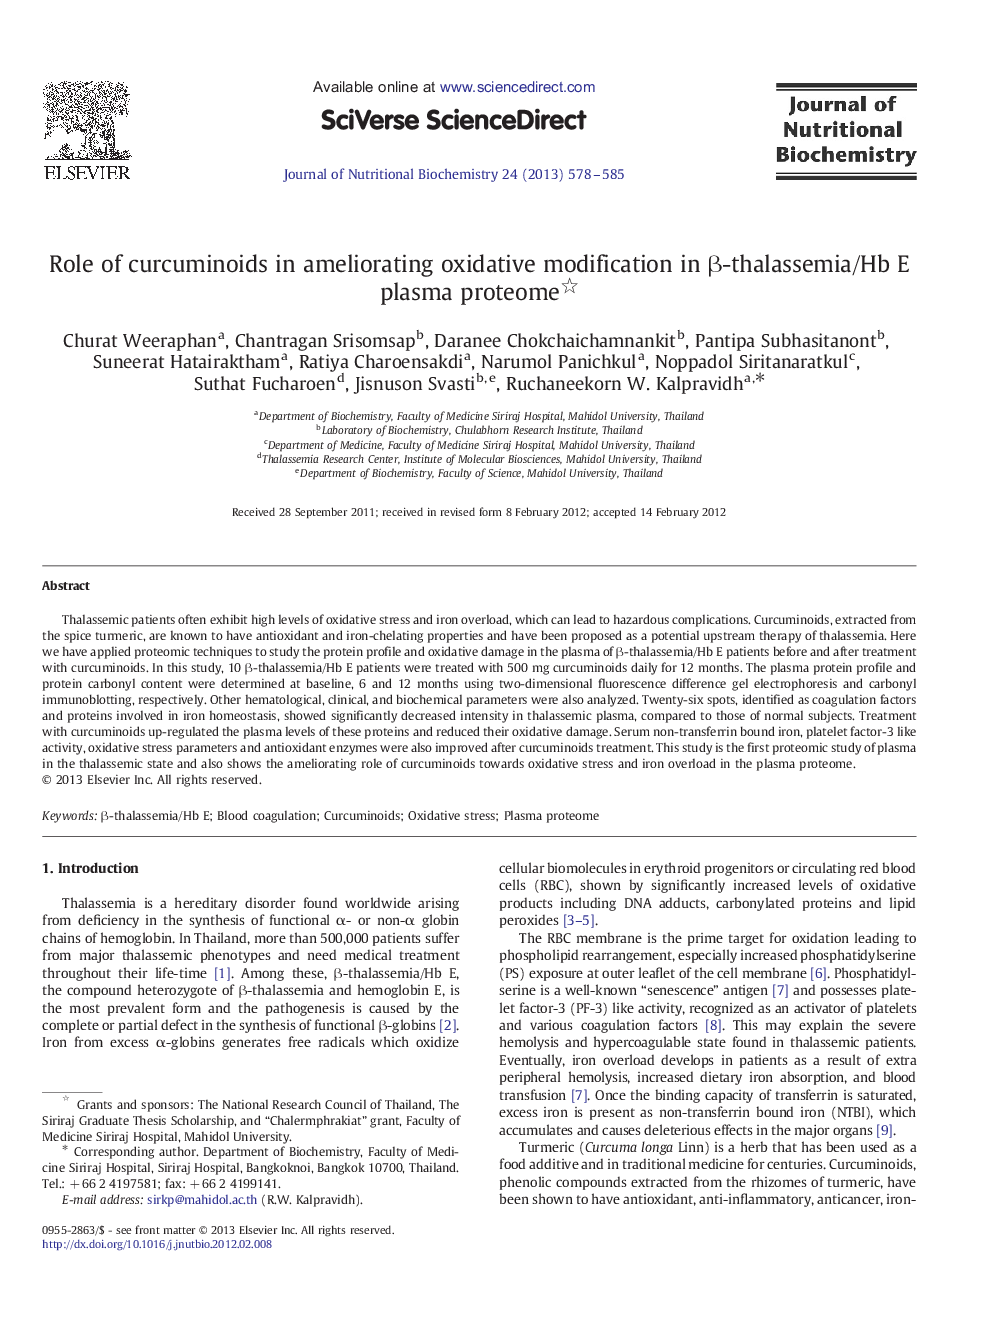 Role of curcuminoids in ameliorating oxidative modification in β-thalassemia/Hb E plasma proteome 